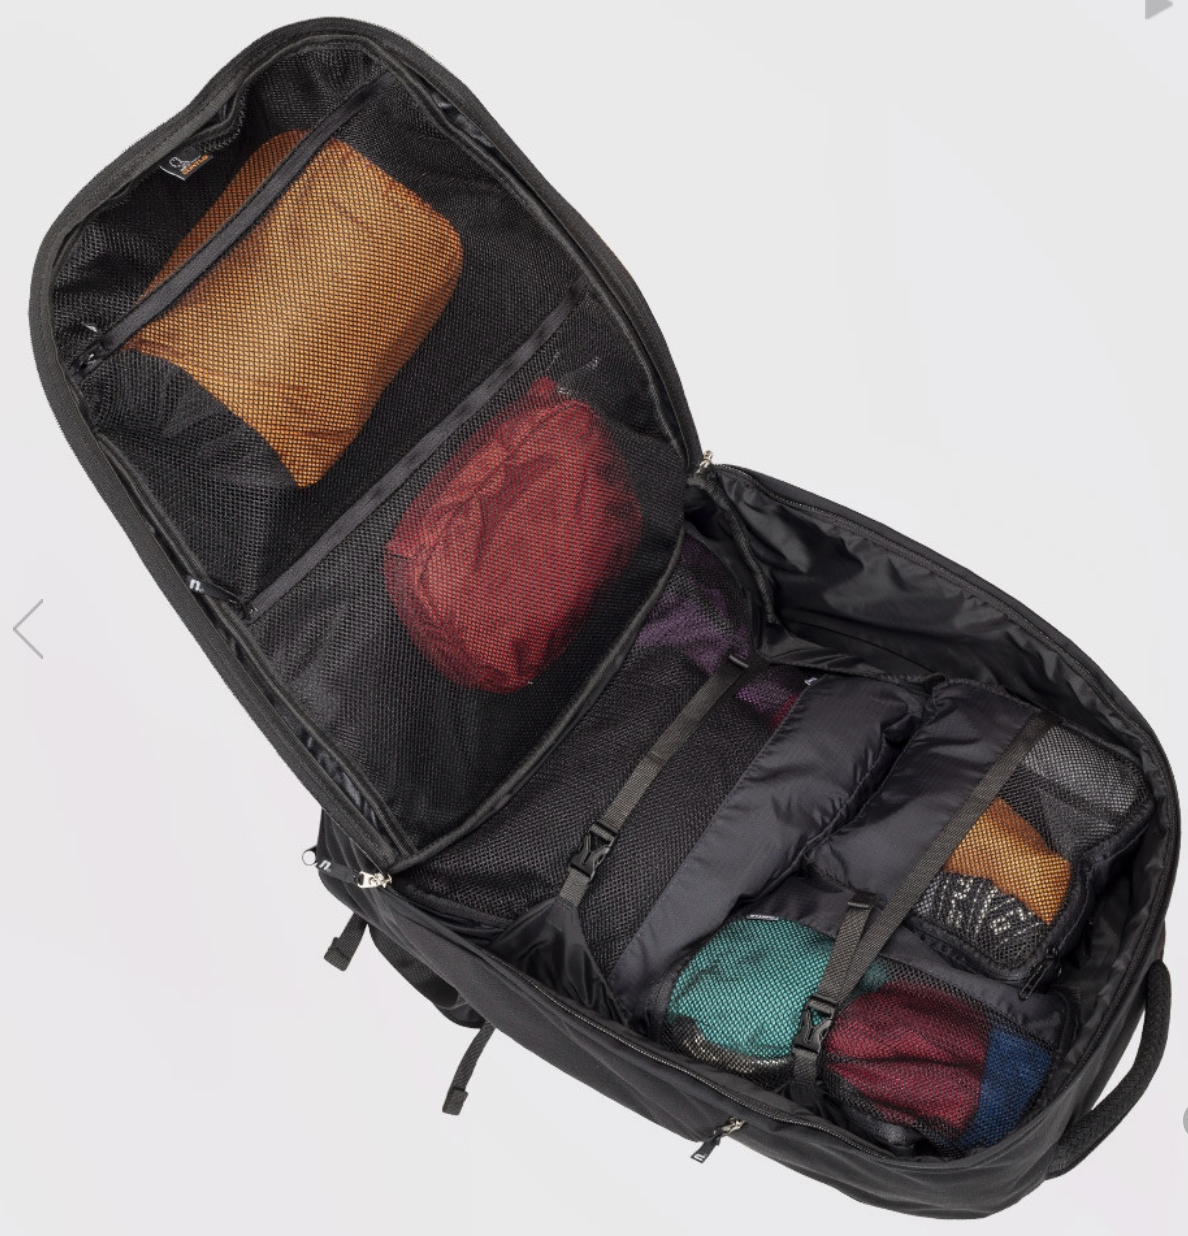 Gear Tips - Backpacks